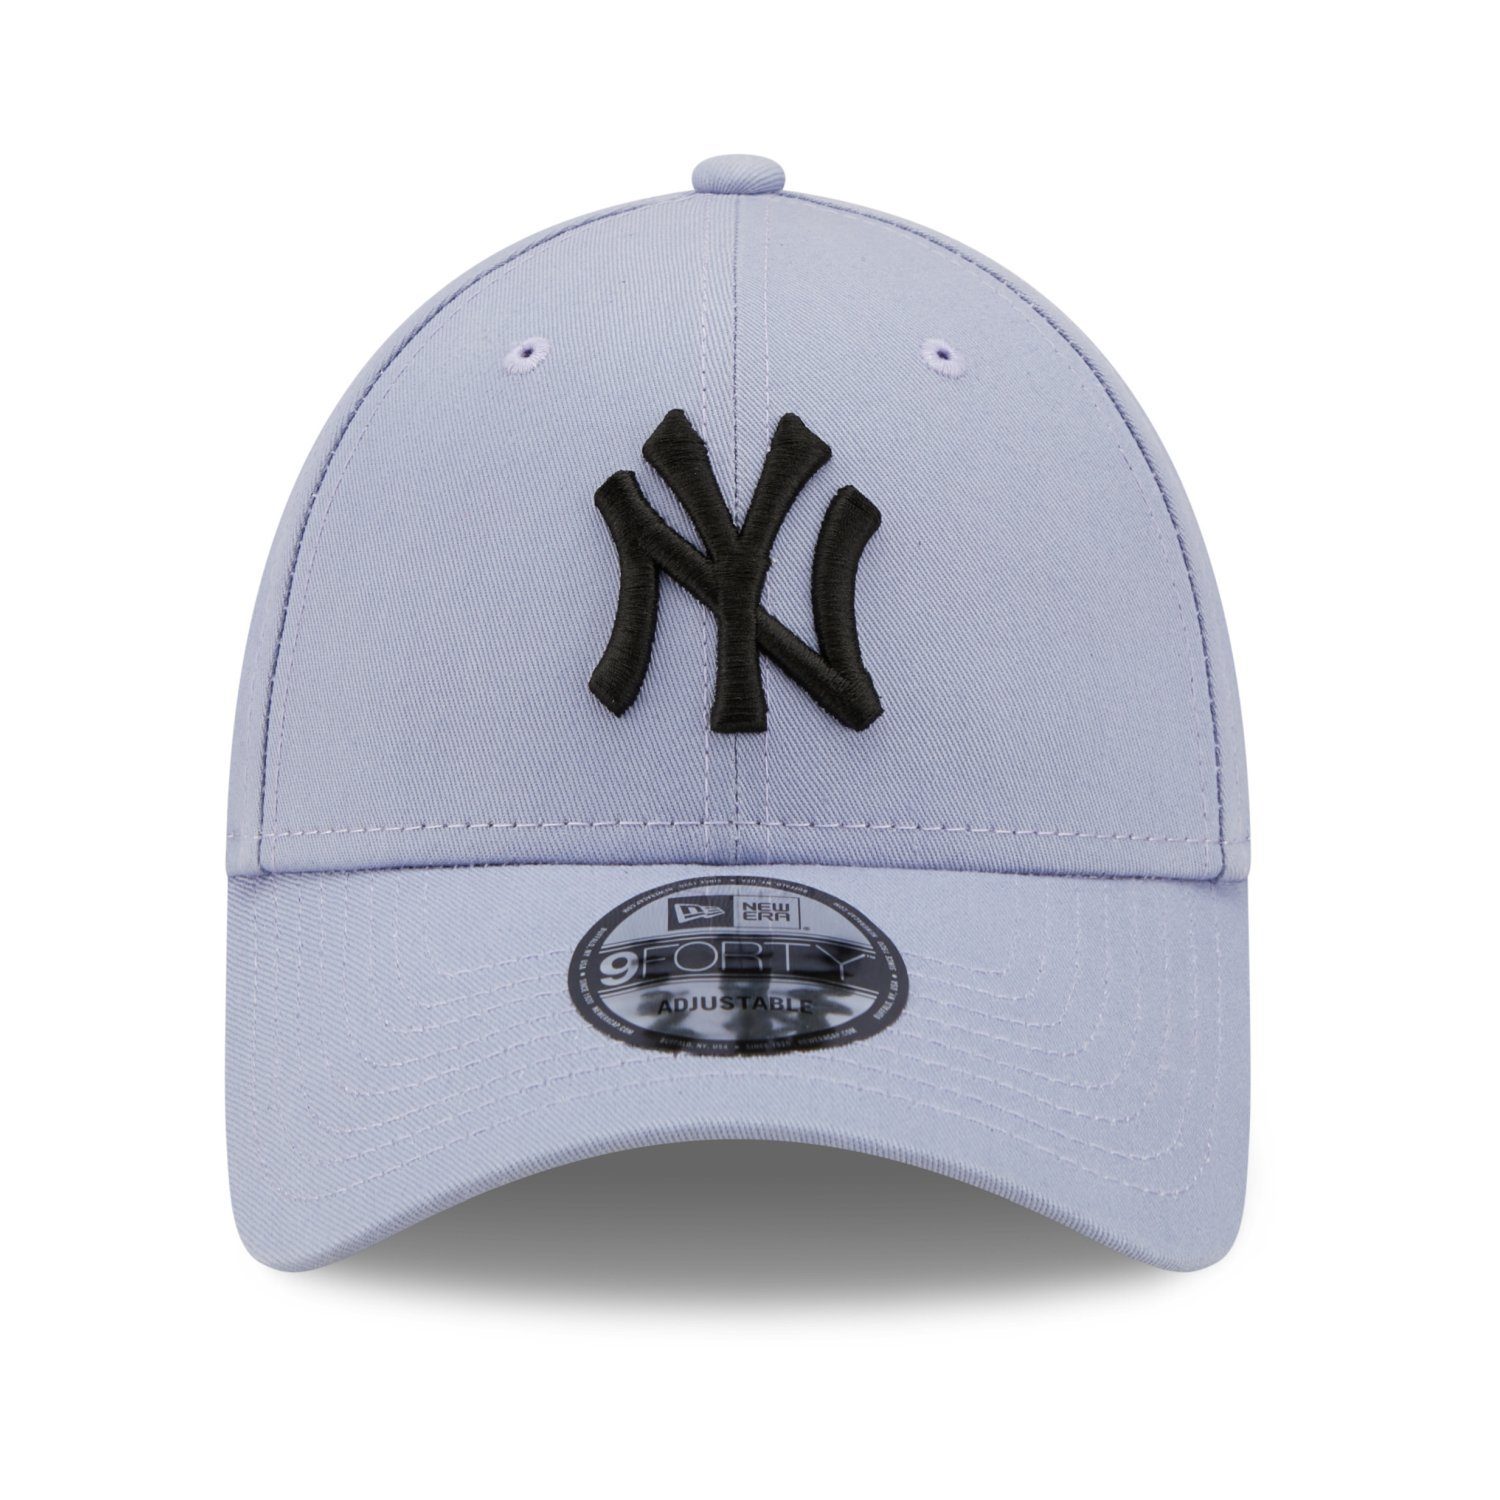 Cap Strapback Era 9Forty York New pastel Baseball New Yankees